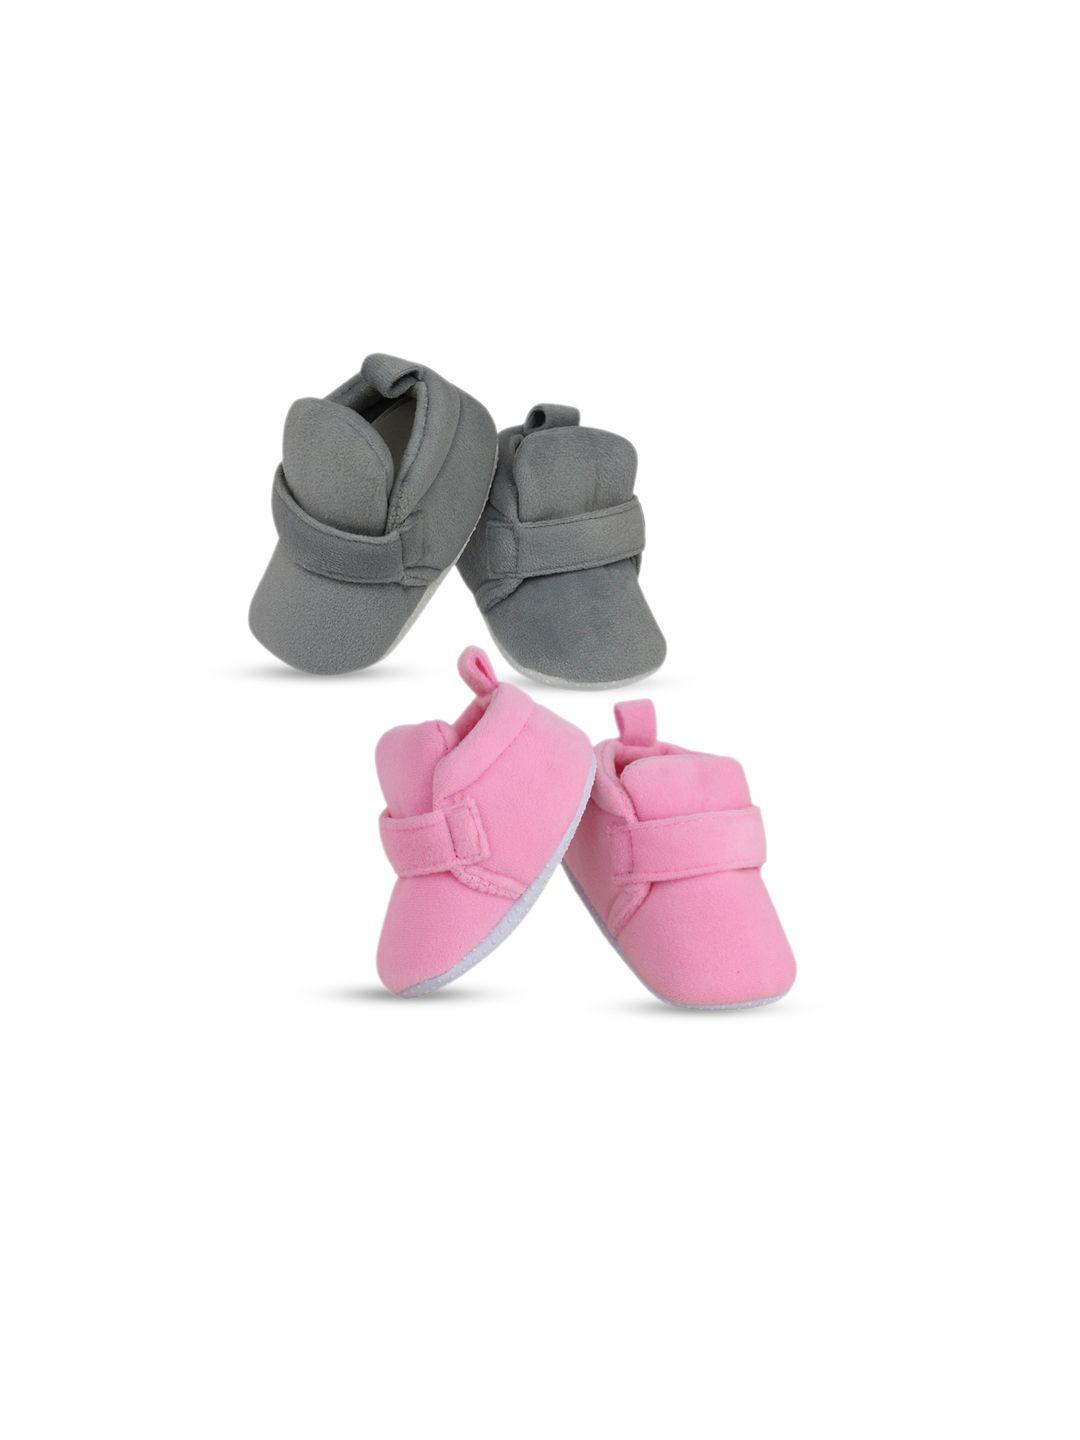 baesd infants set of 2 anti-skid sole velvet booties